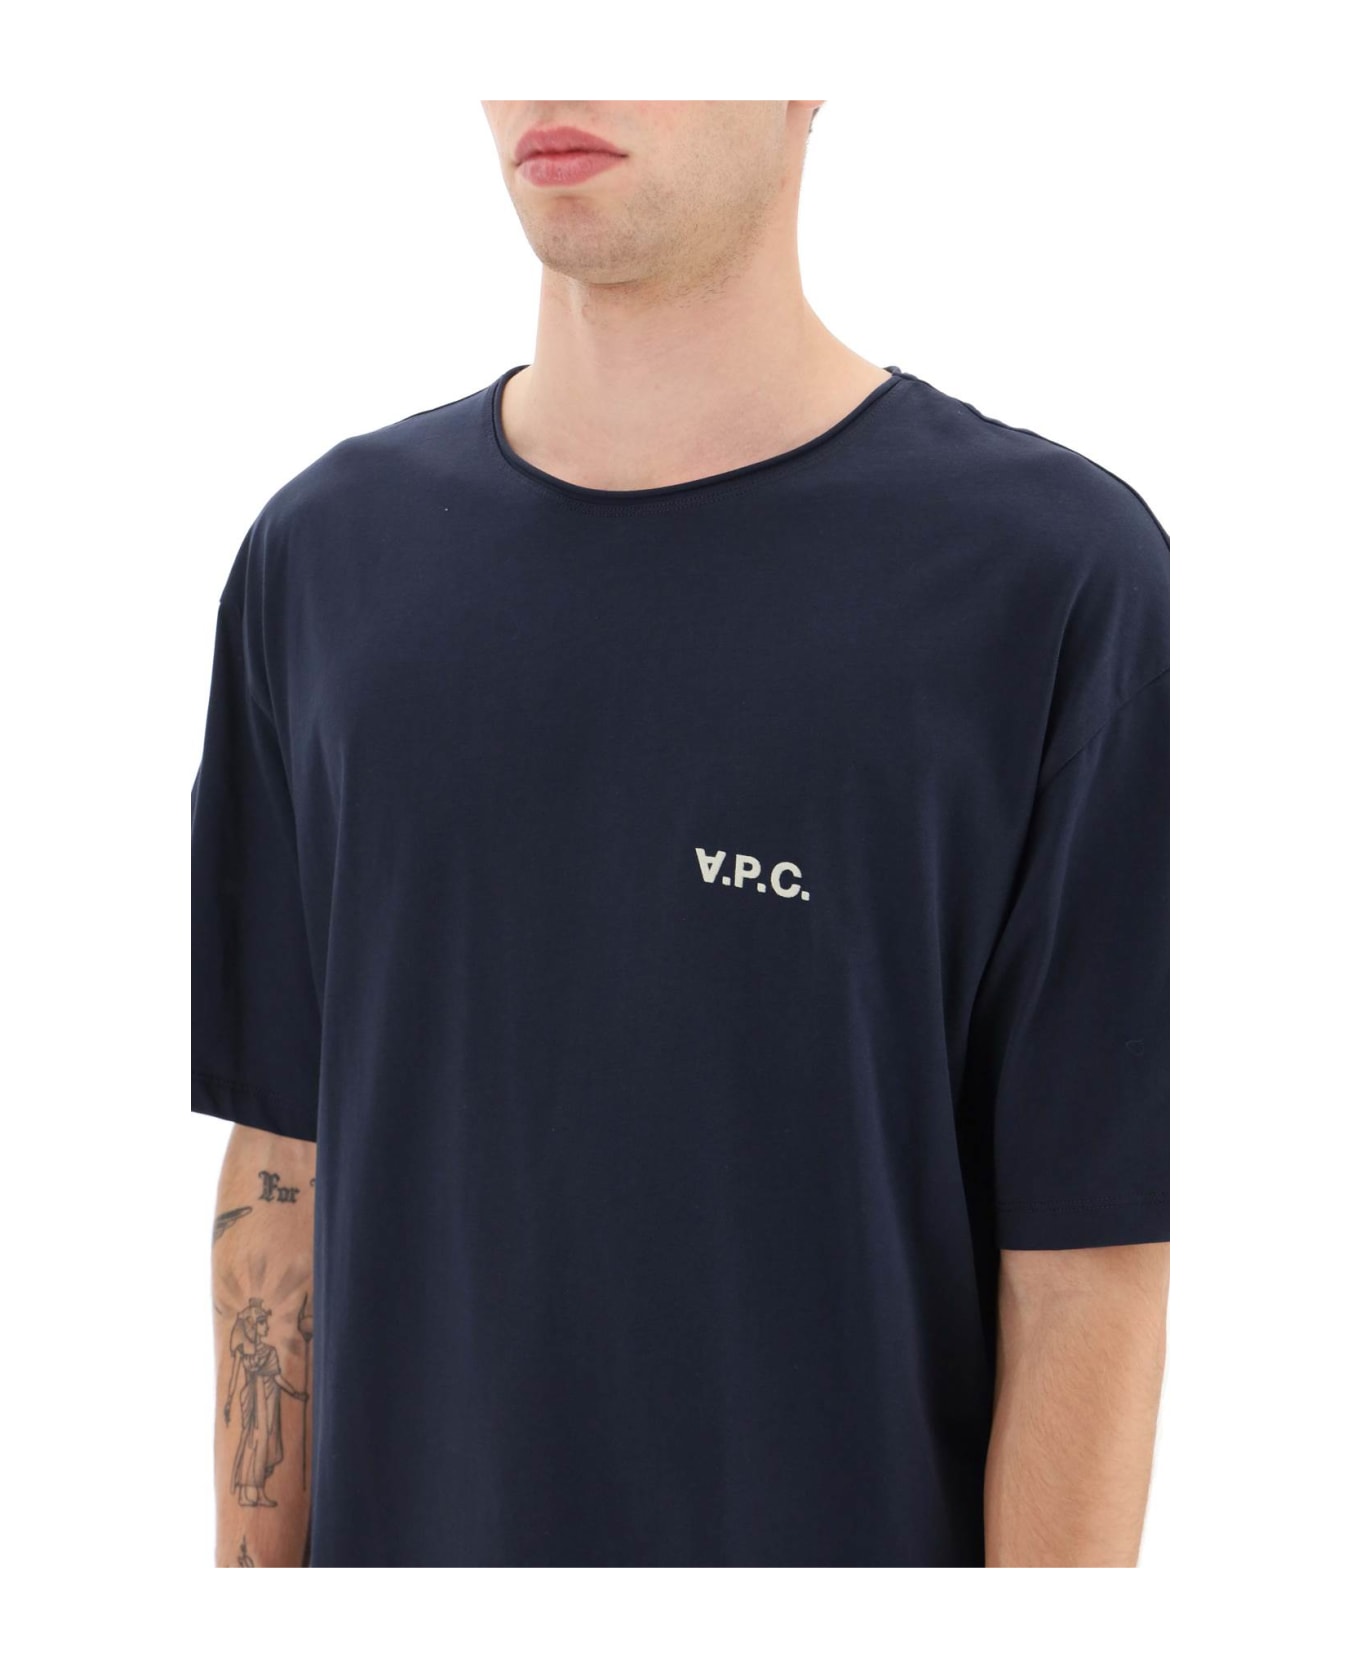 A.P.C. Jeremy T-shirt - DARK NAVY (Blue)